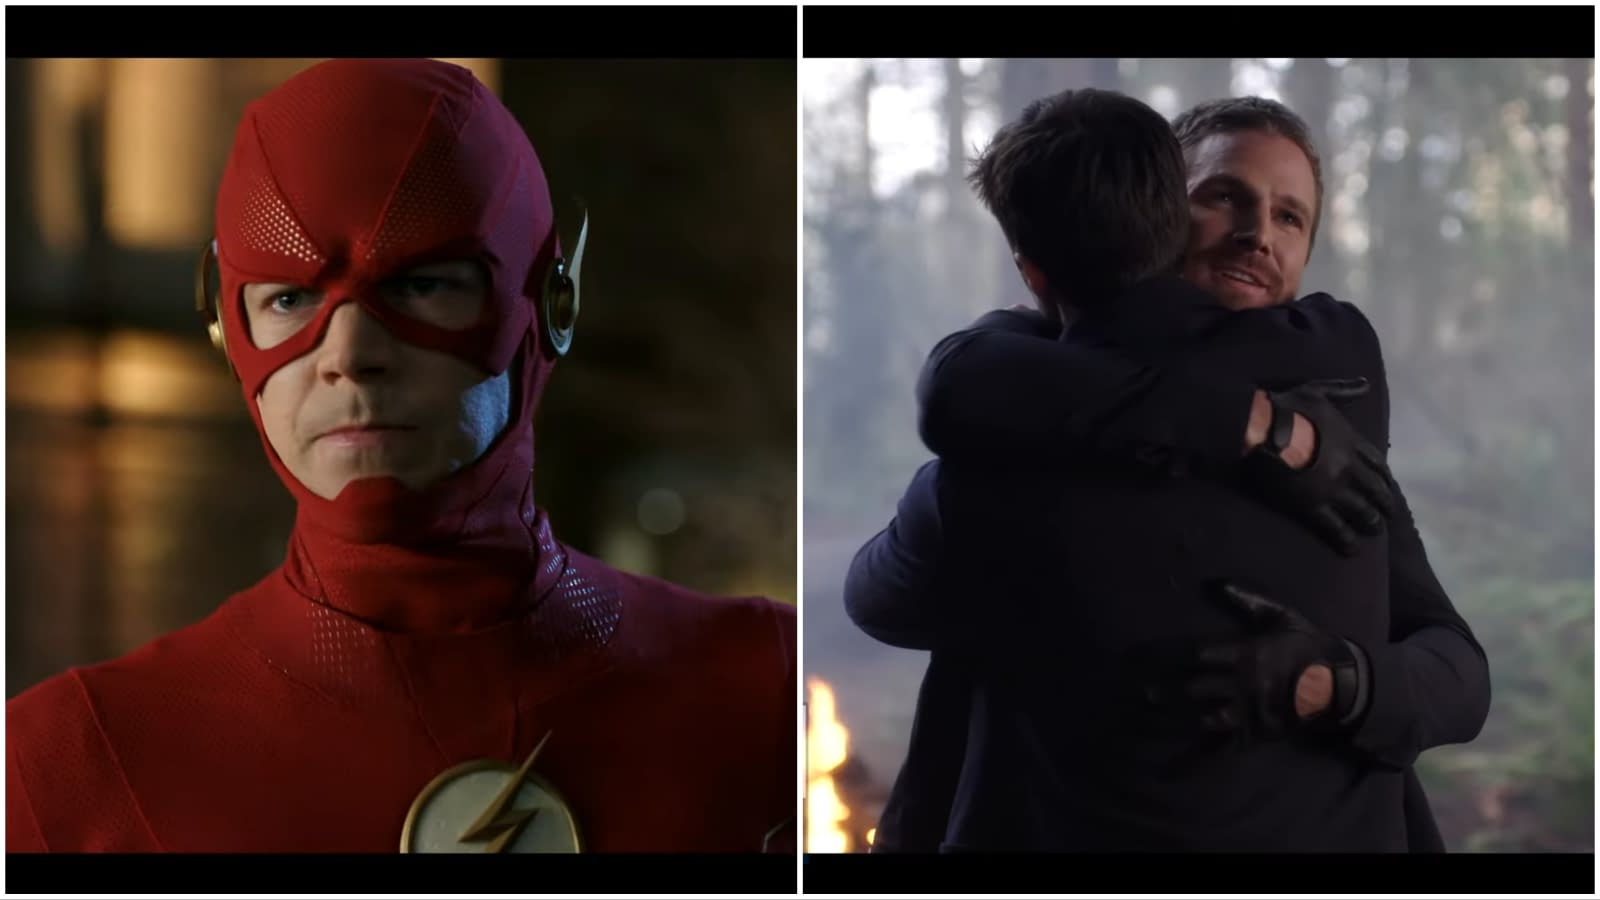 The Flash Season 9 Promo (HD) Final Season 